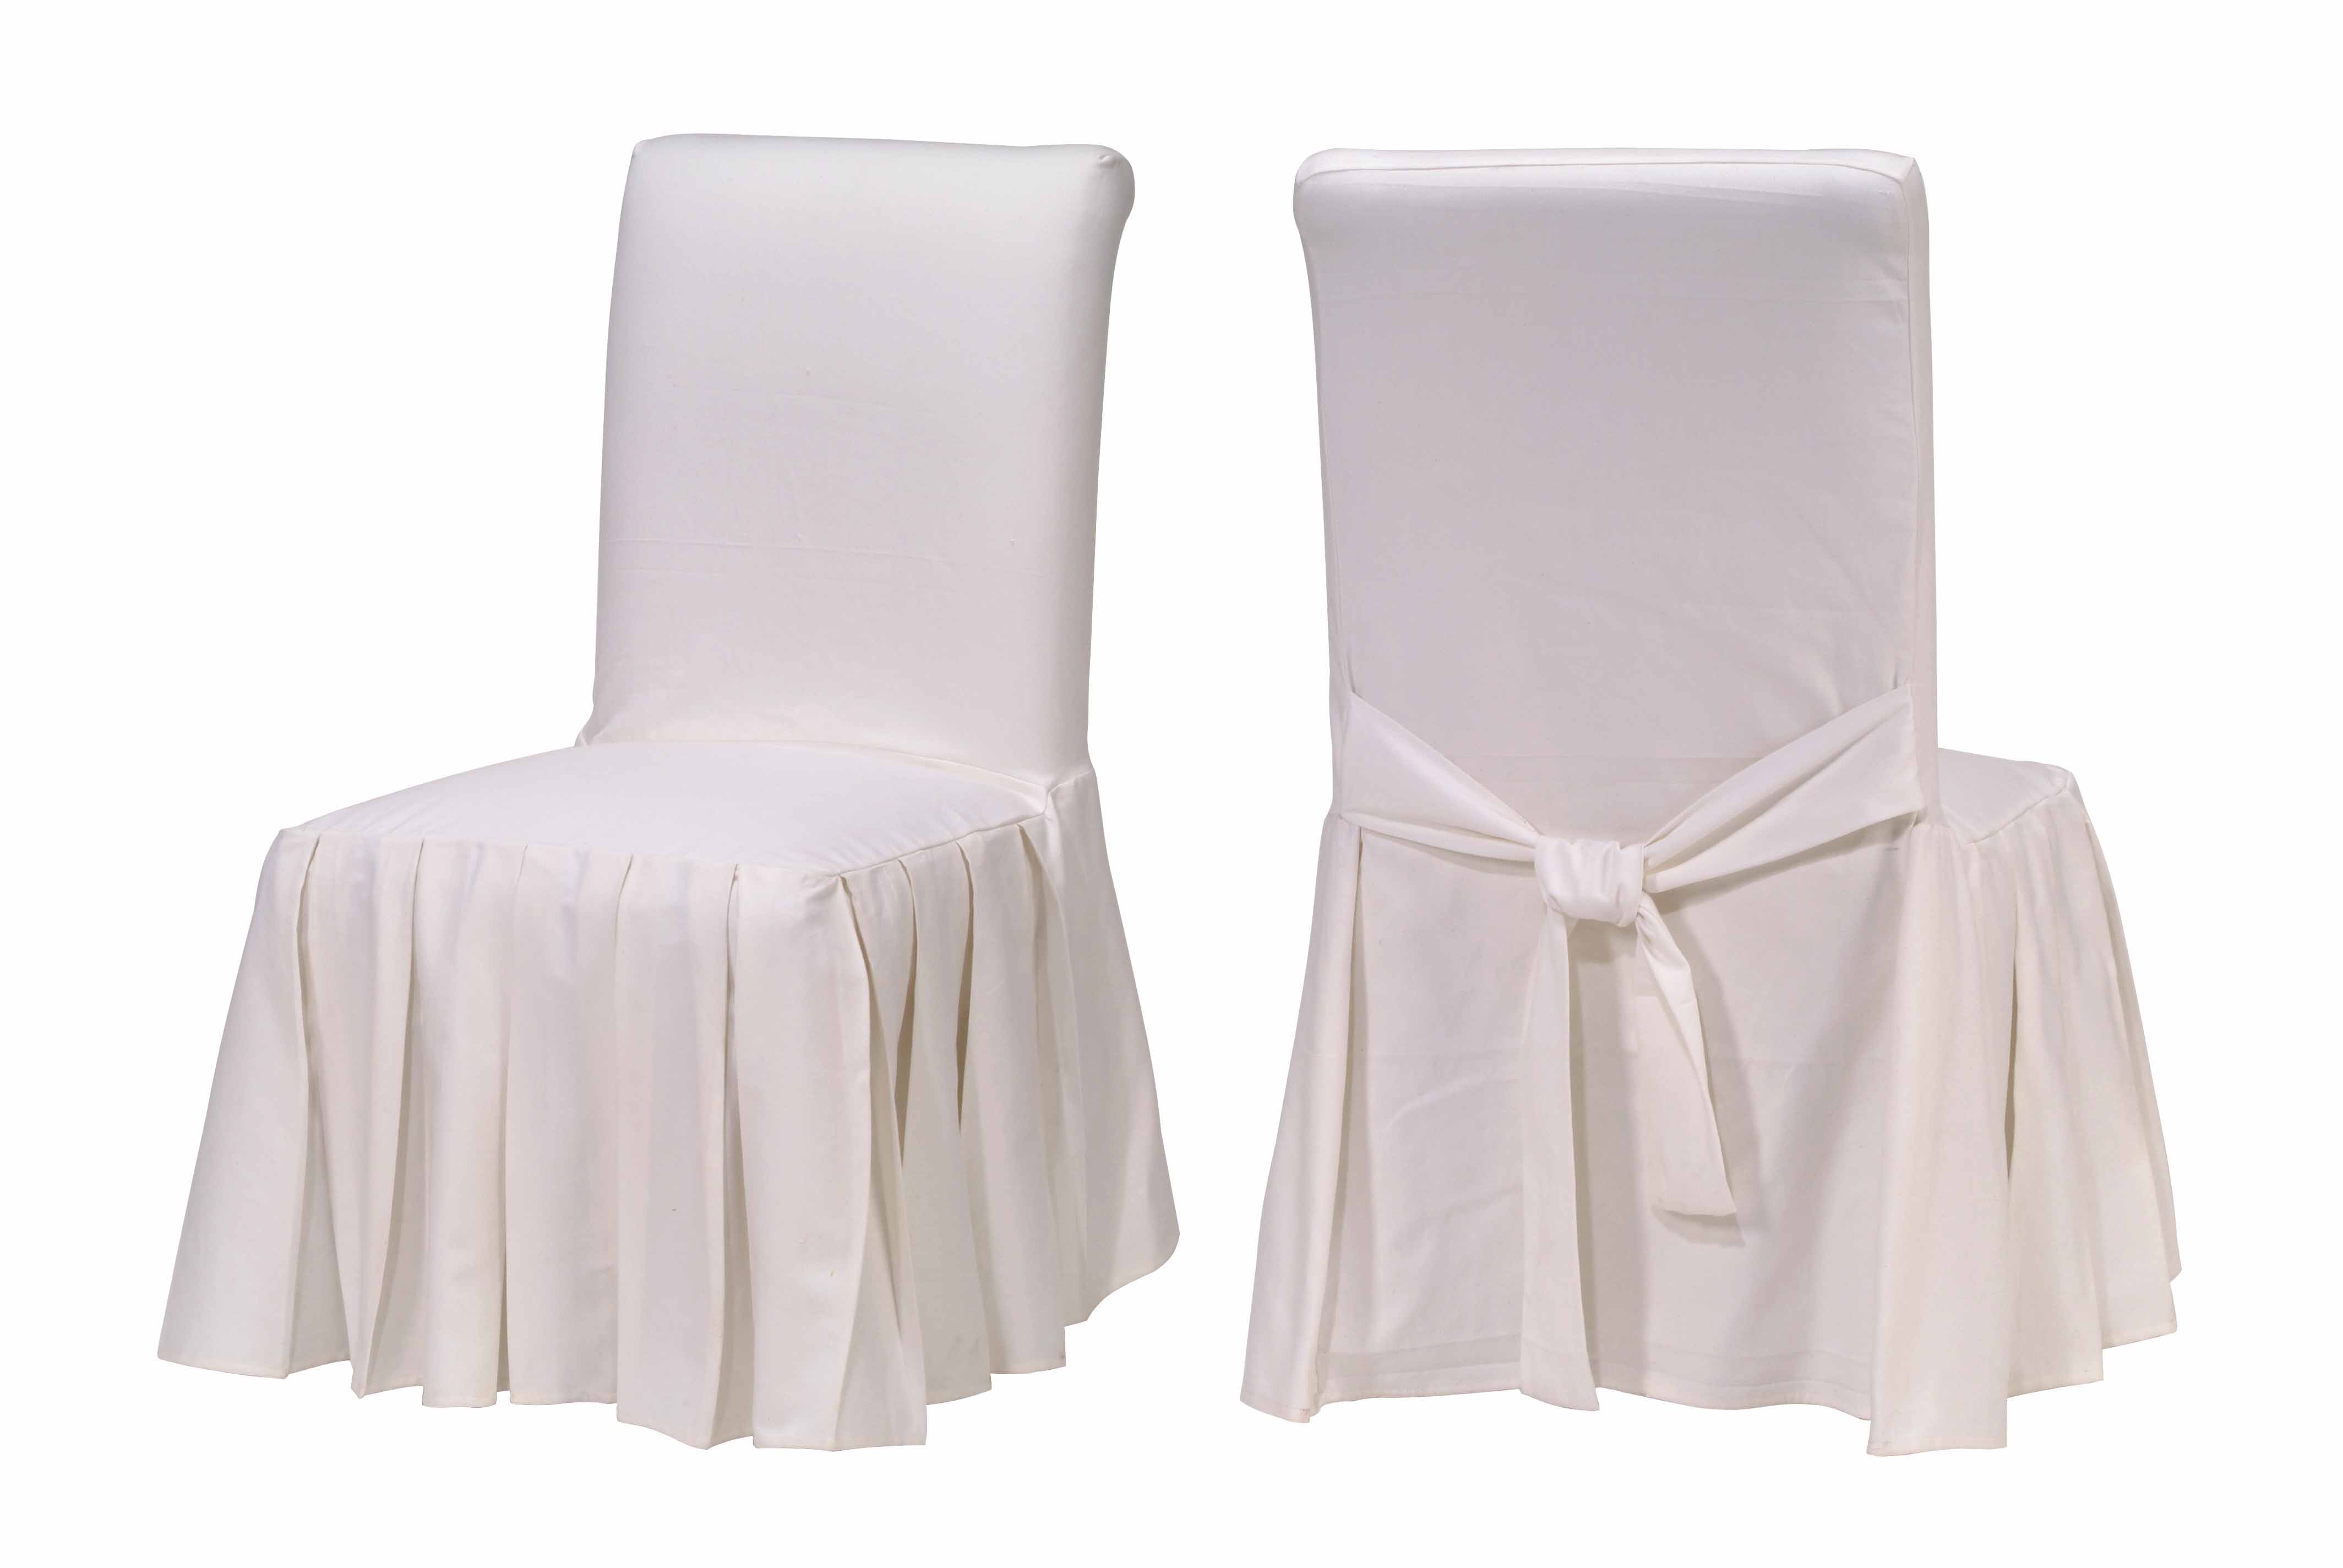 Cotton Duck Full Length Dining Room Chair Slipcover